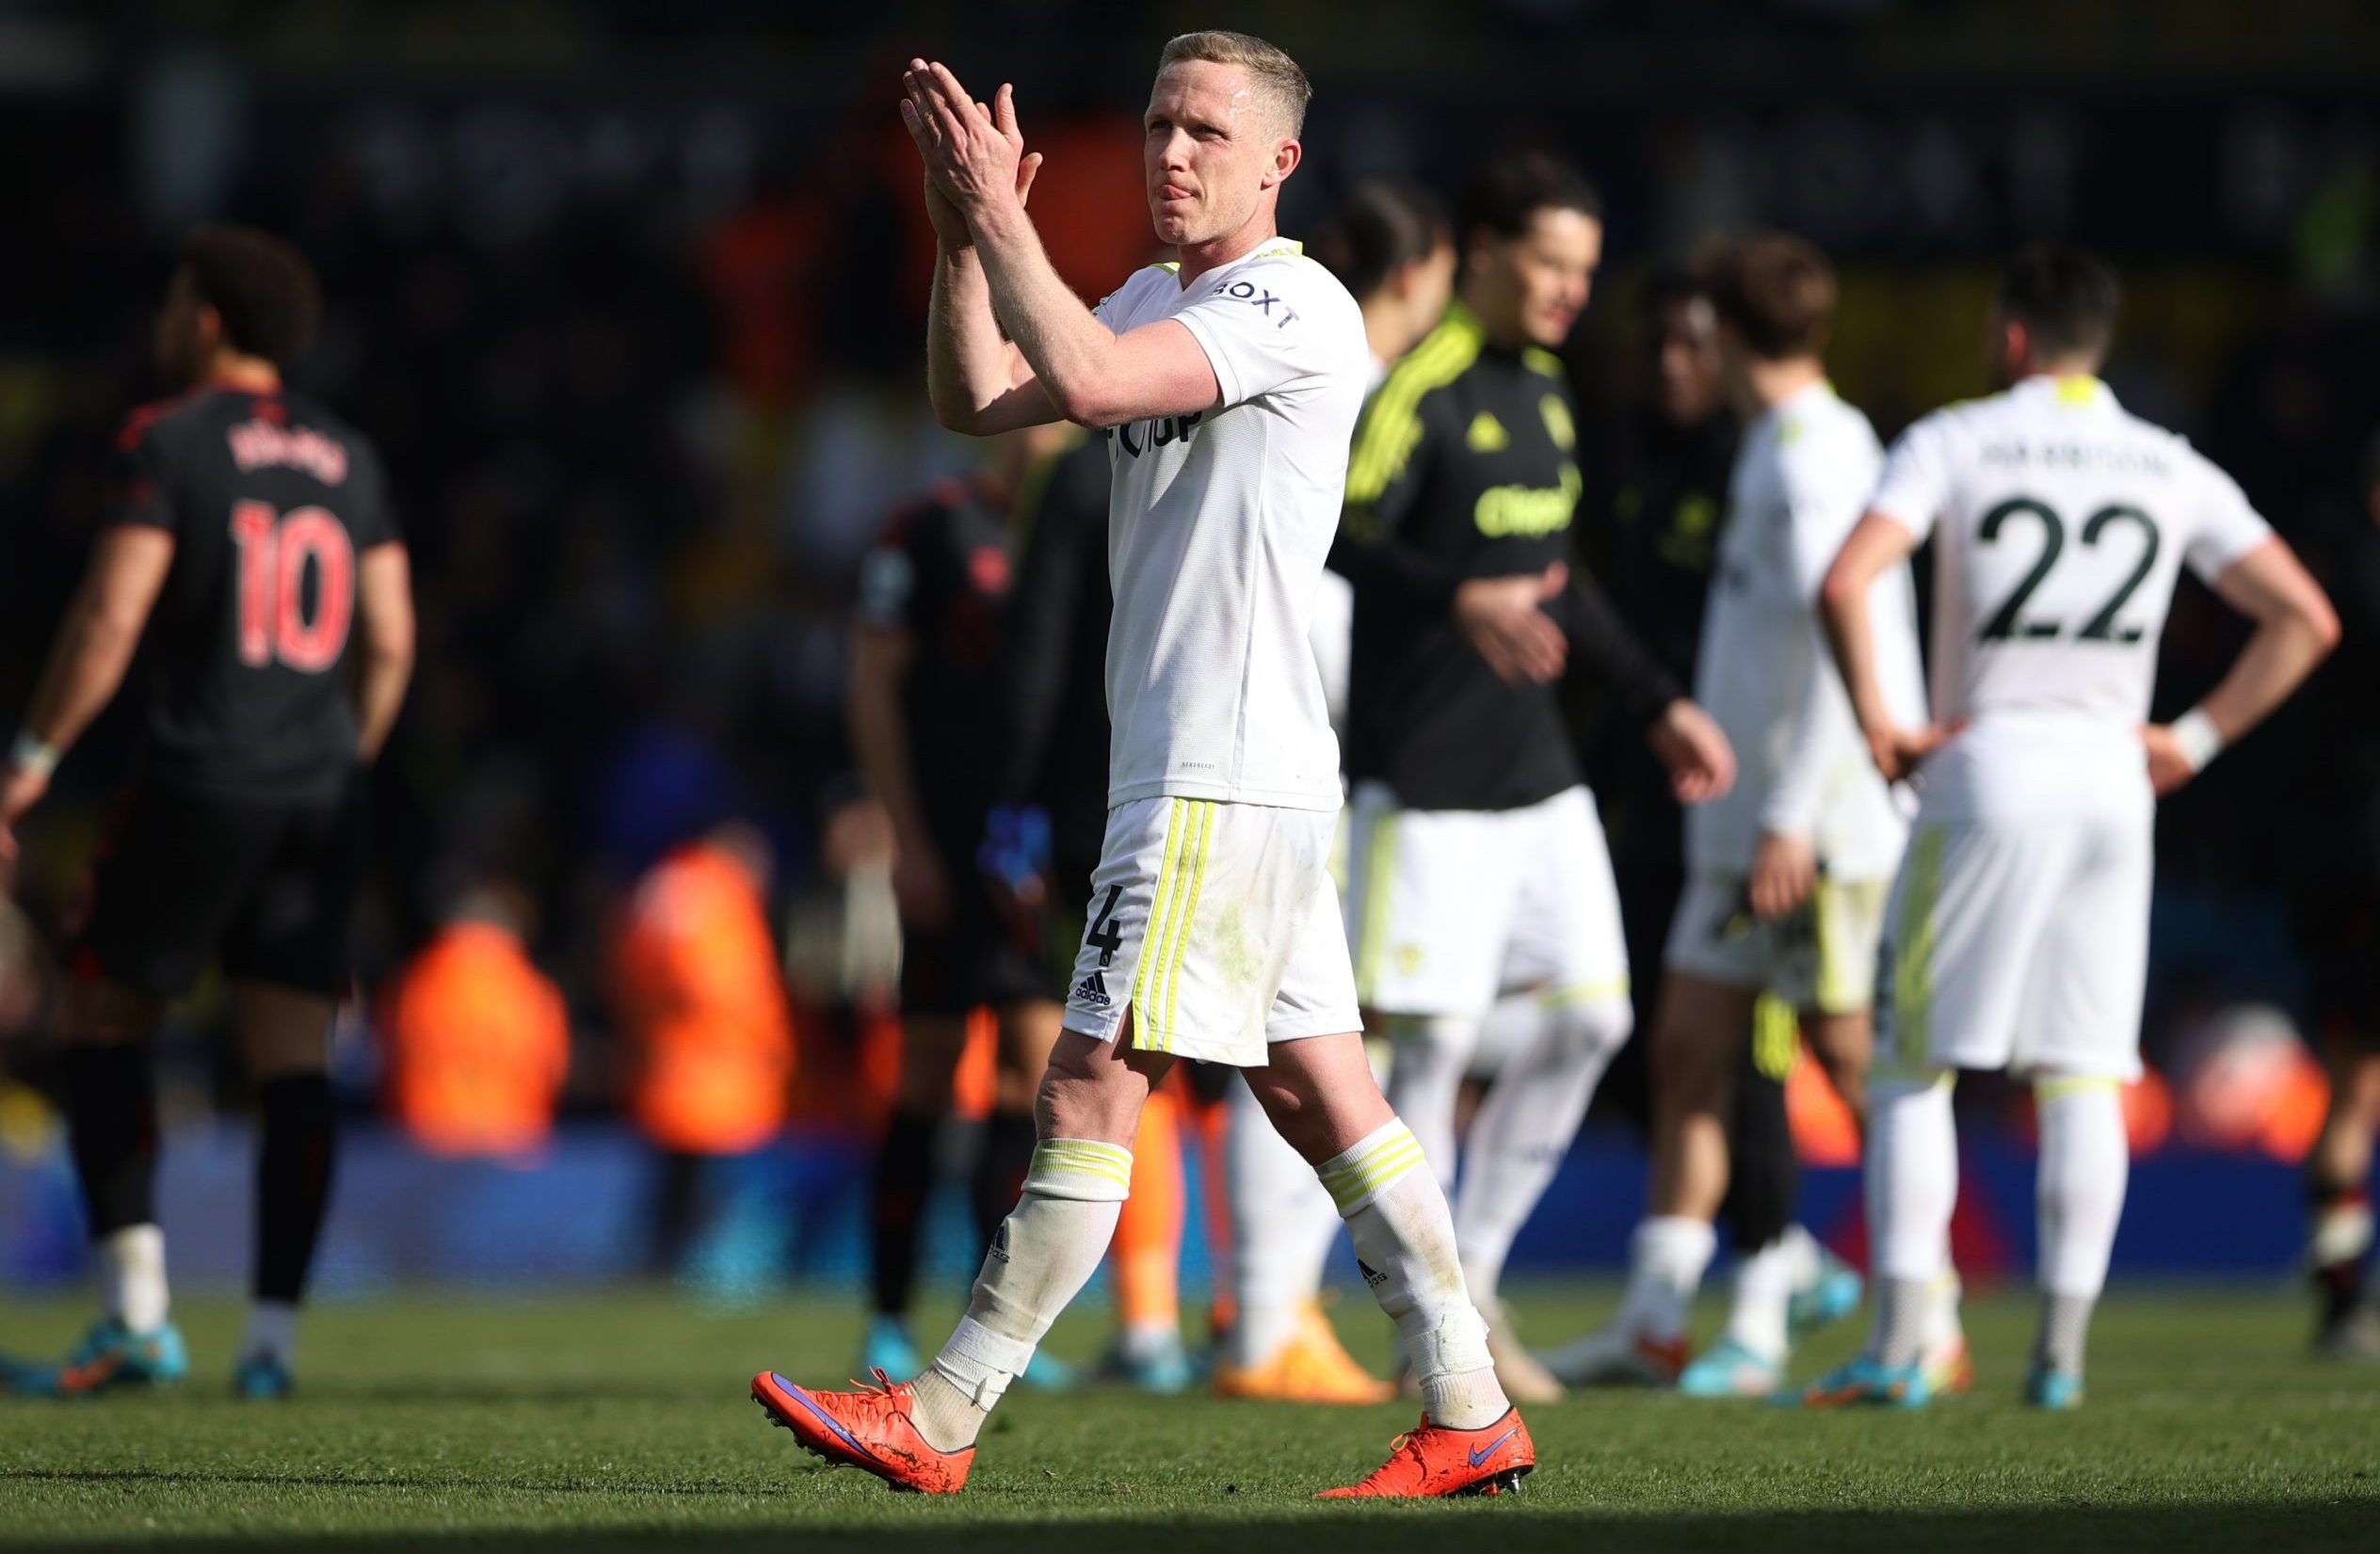 Leeds United's Adam Forshaw applauds fans after the match